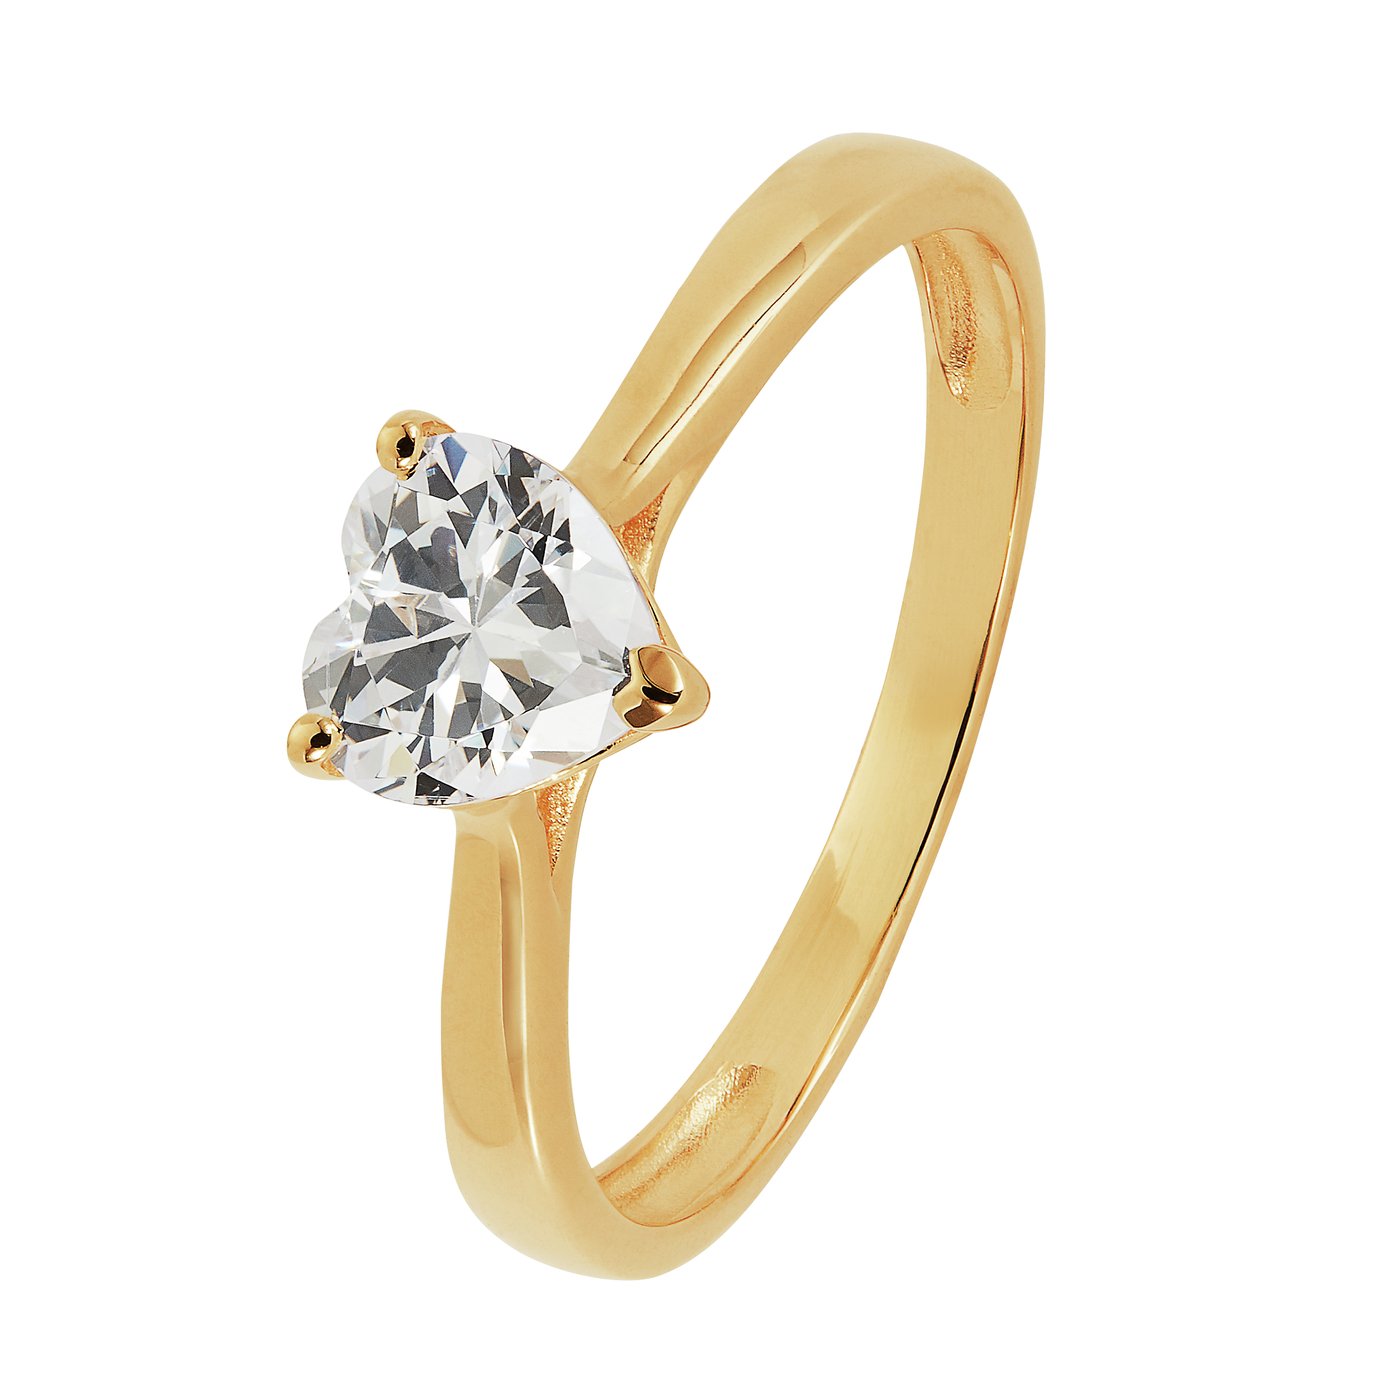 Revere 9ct Gold Cubic Zirconia Engagement Ring - J